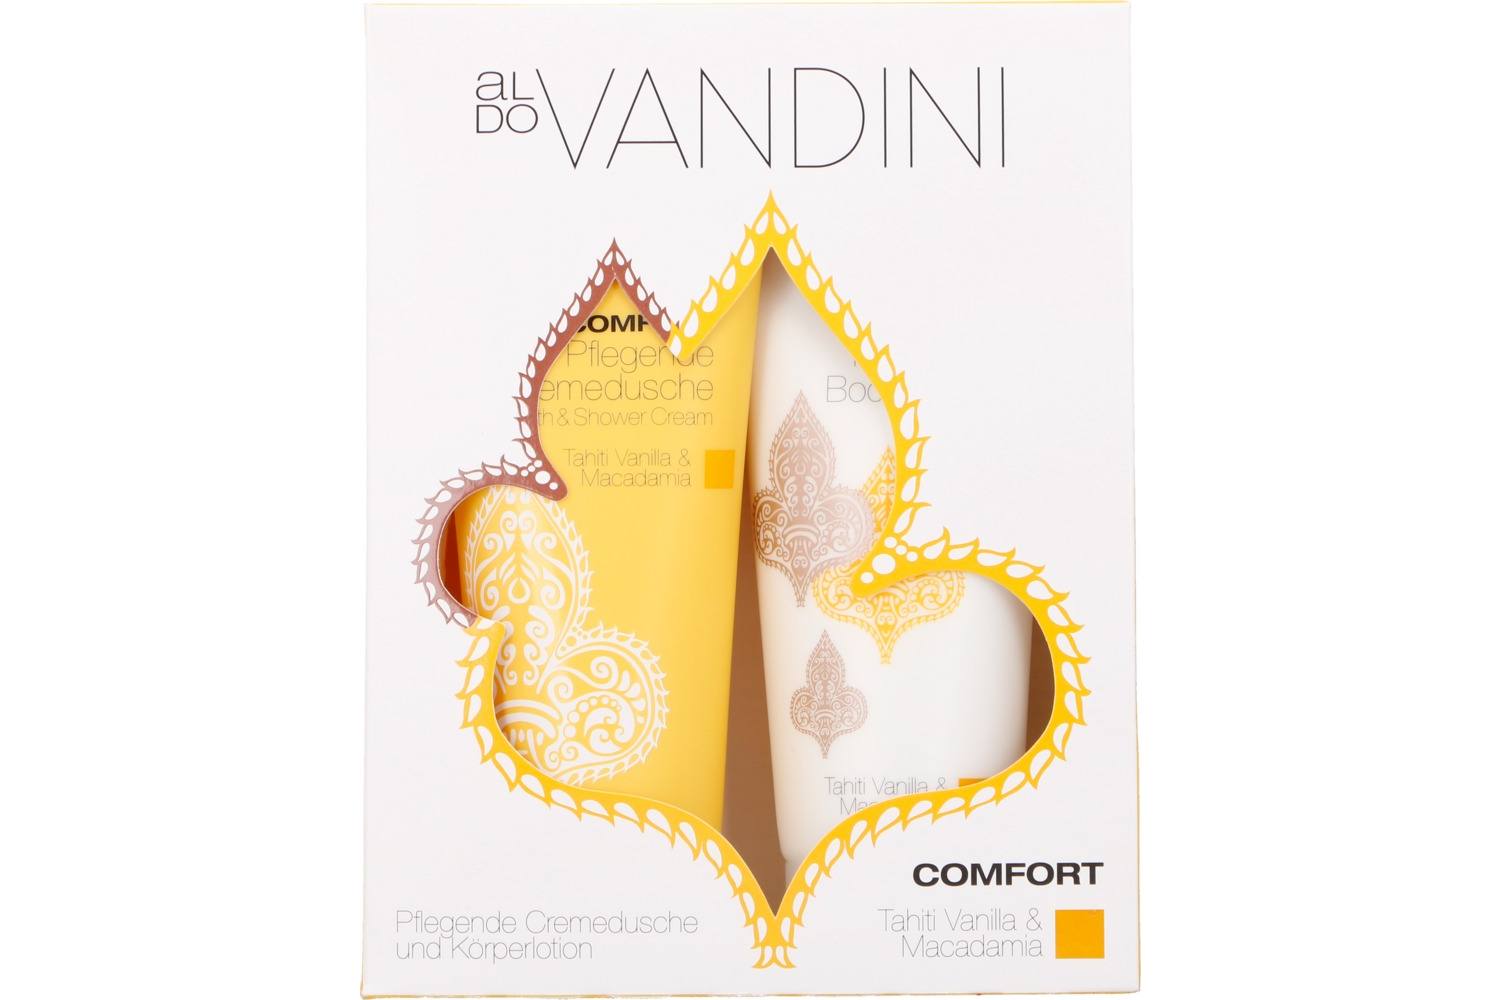 Badset, Aldo vandini, comfort, Tahiti vanilla & macadamia, 2 stuks 2